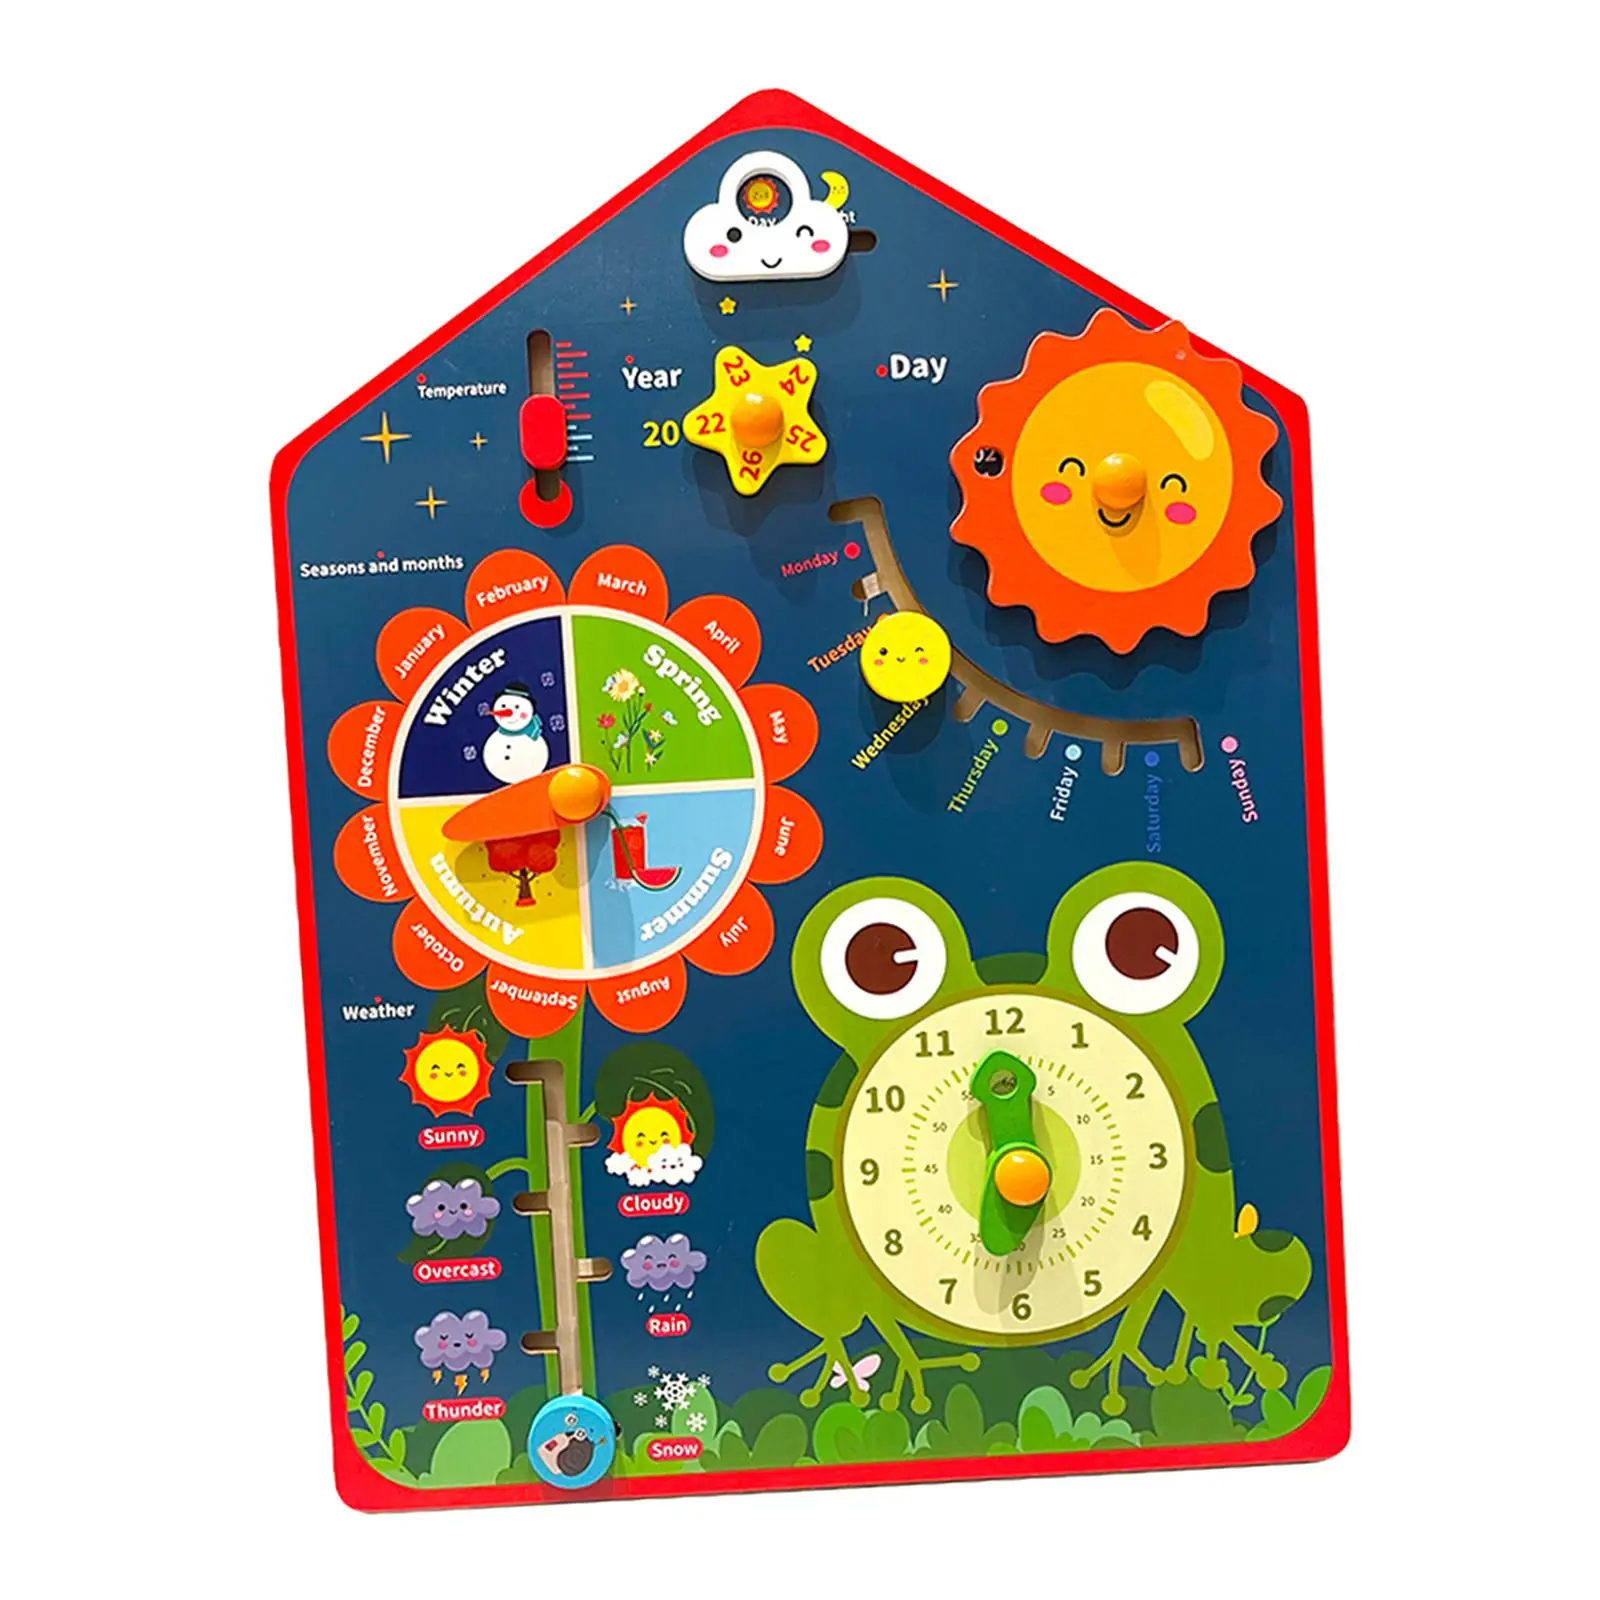 Montessori Wooden Calendar Clock Learning Educational Toy for Children